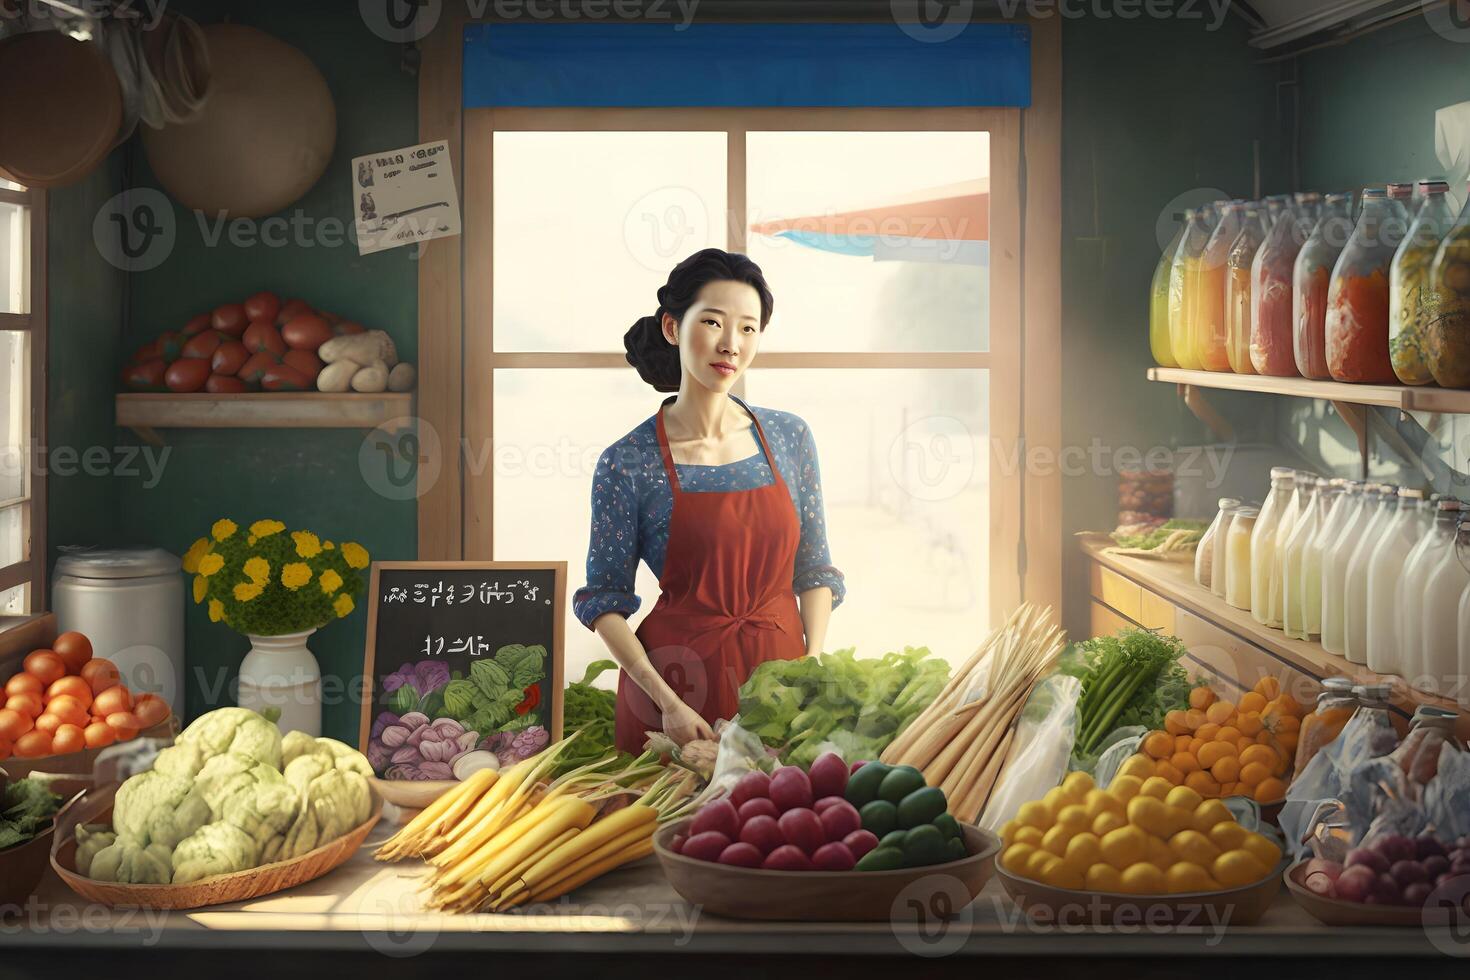 schön asiatisch Frau verkauft Gemüse. neural Netzwerk ai generiert foto